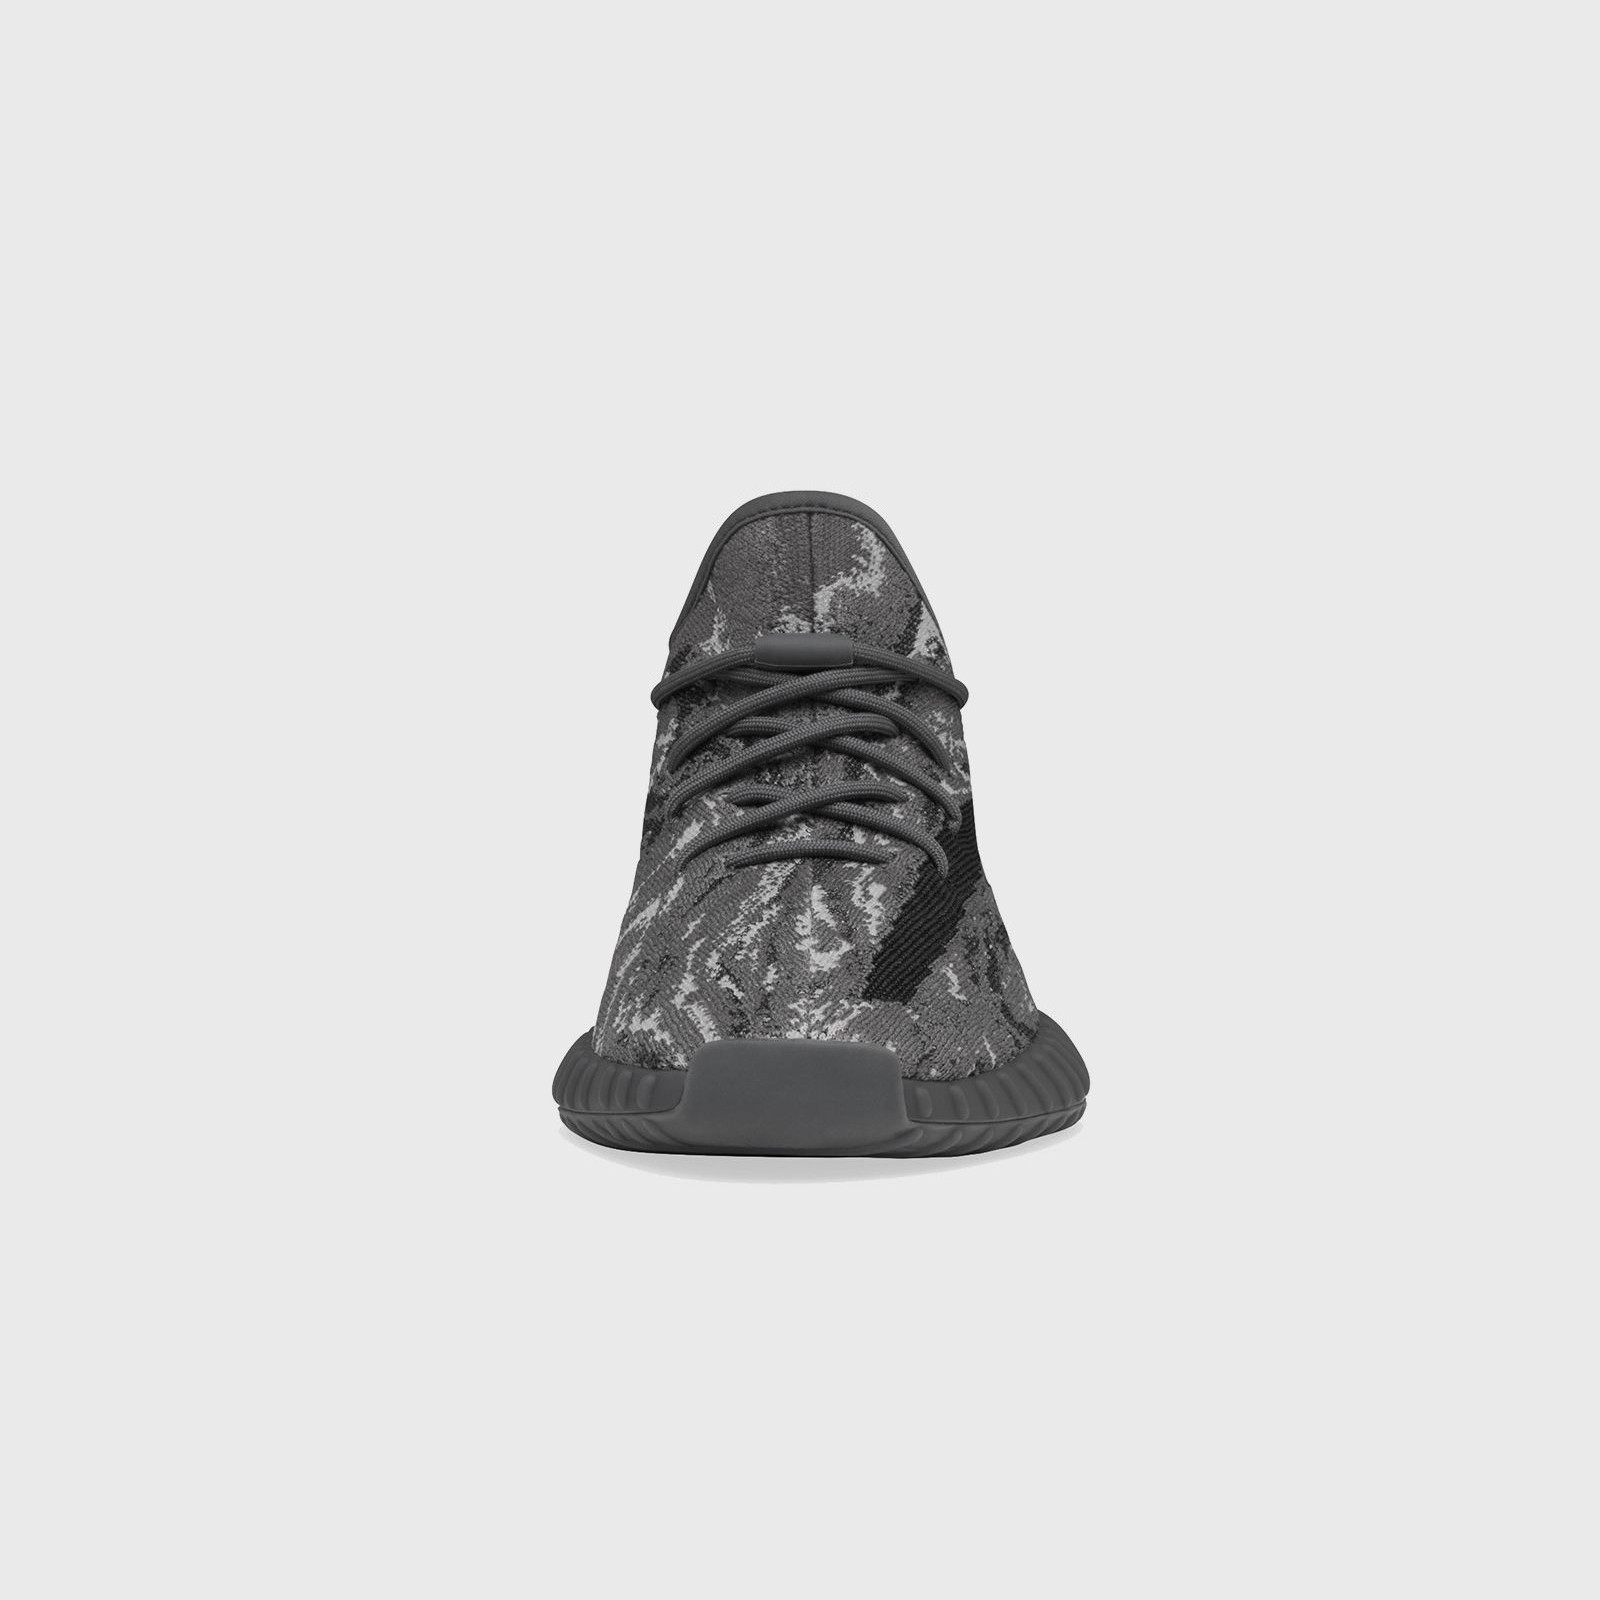 Adidas Boost 350 V2 MX
« Dark Salt »